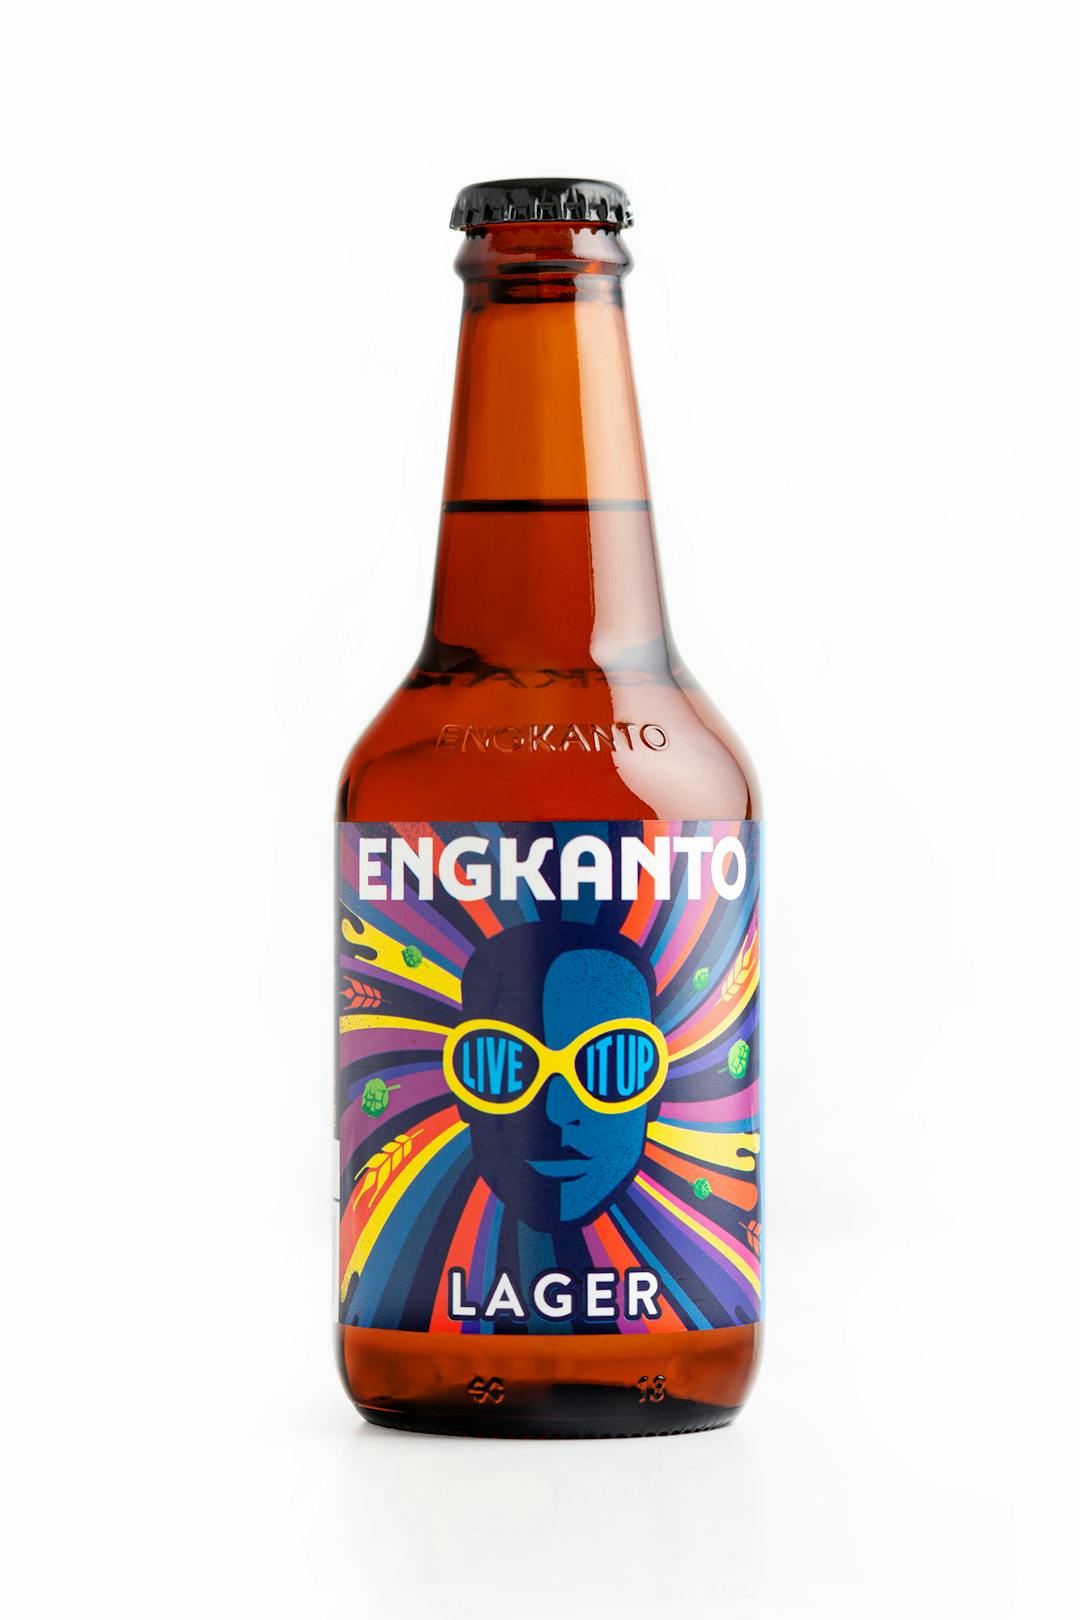 Engkanto Brew Live it Up Lager Beer 330mL (24 Bottles/Case)